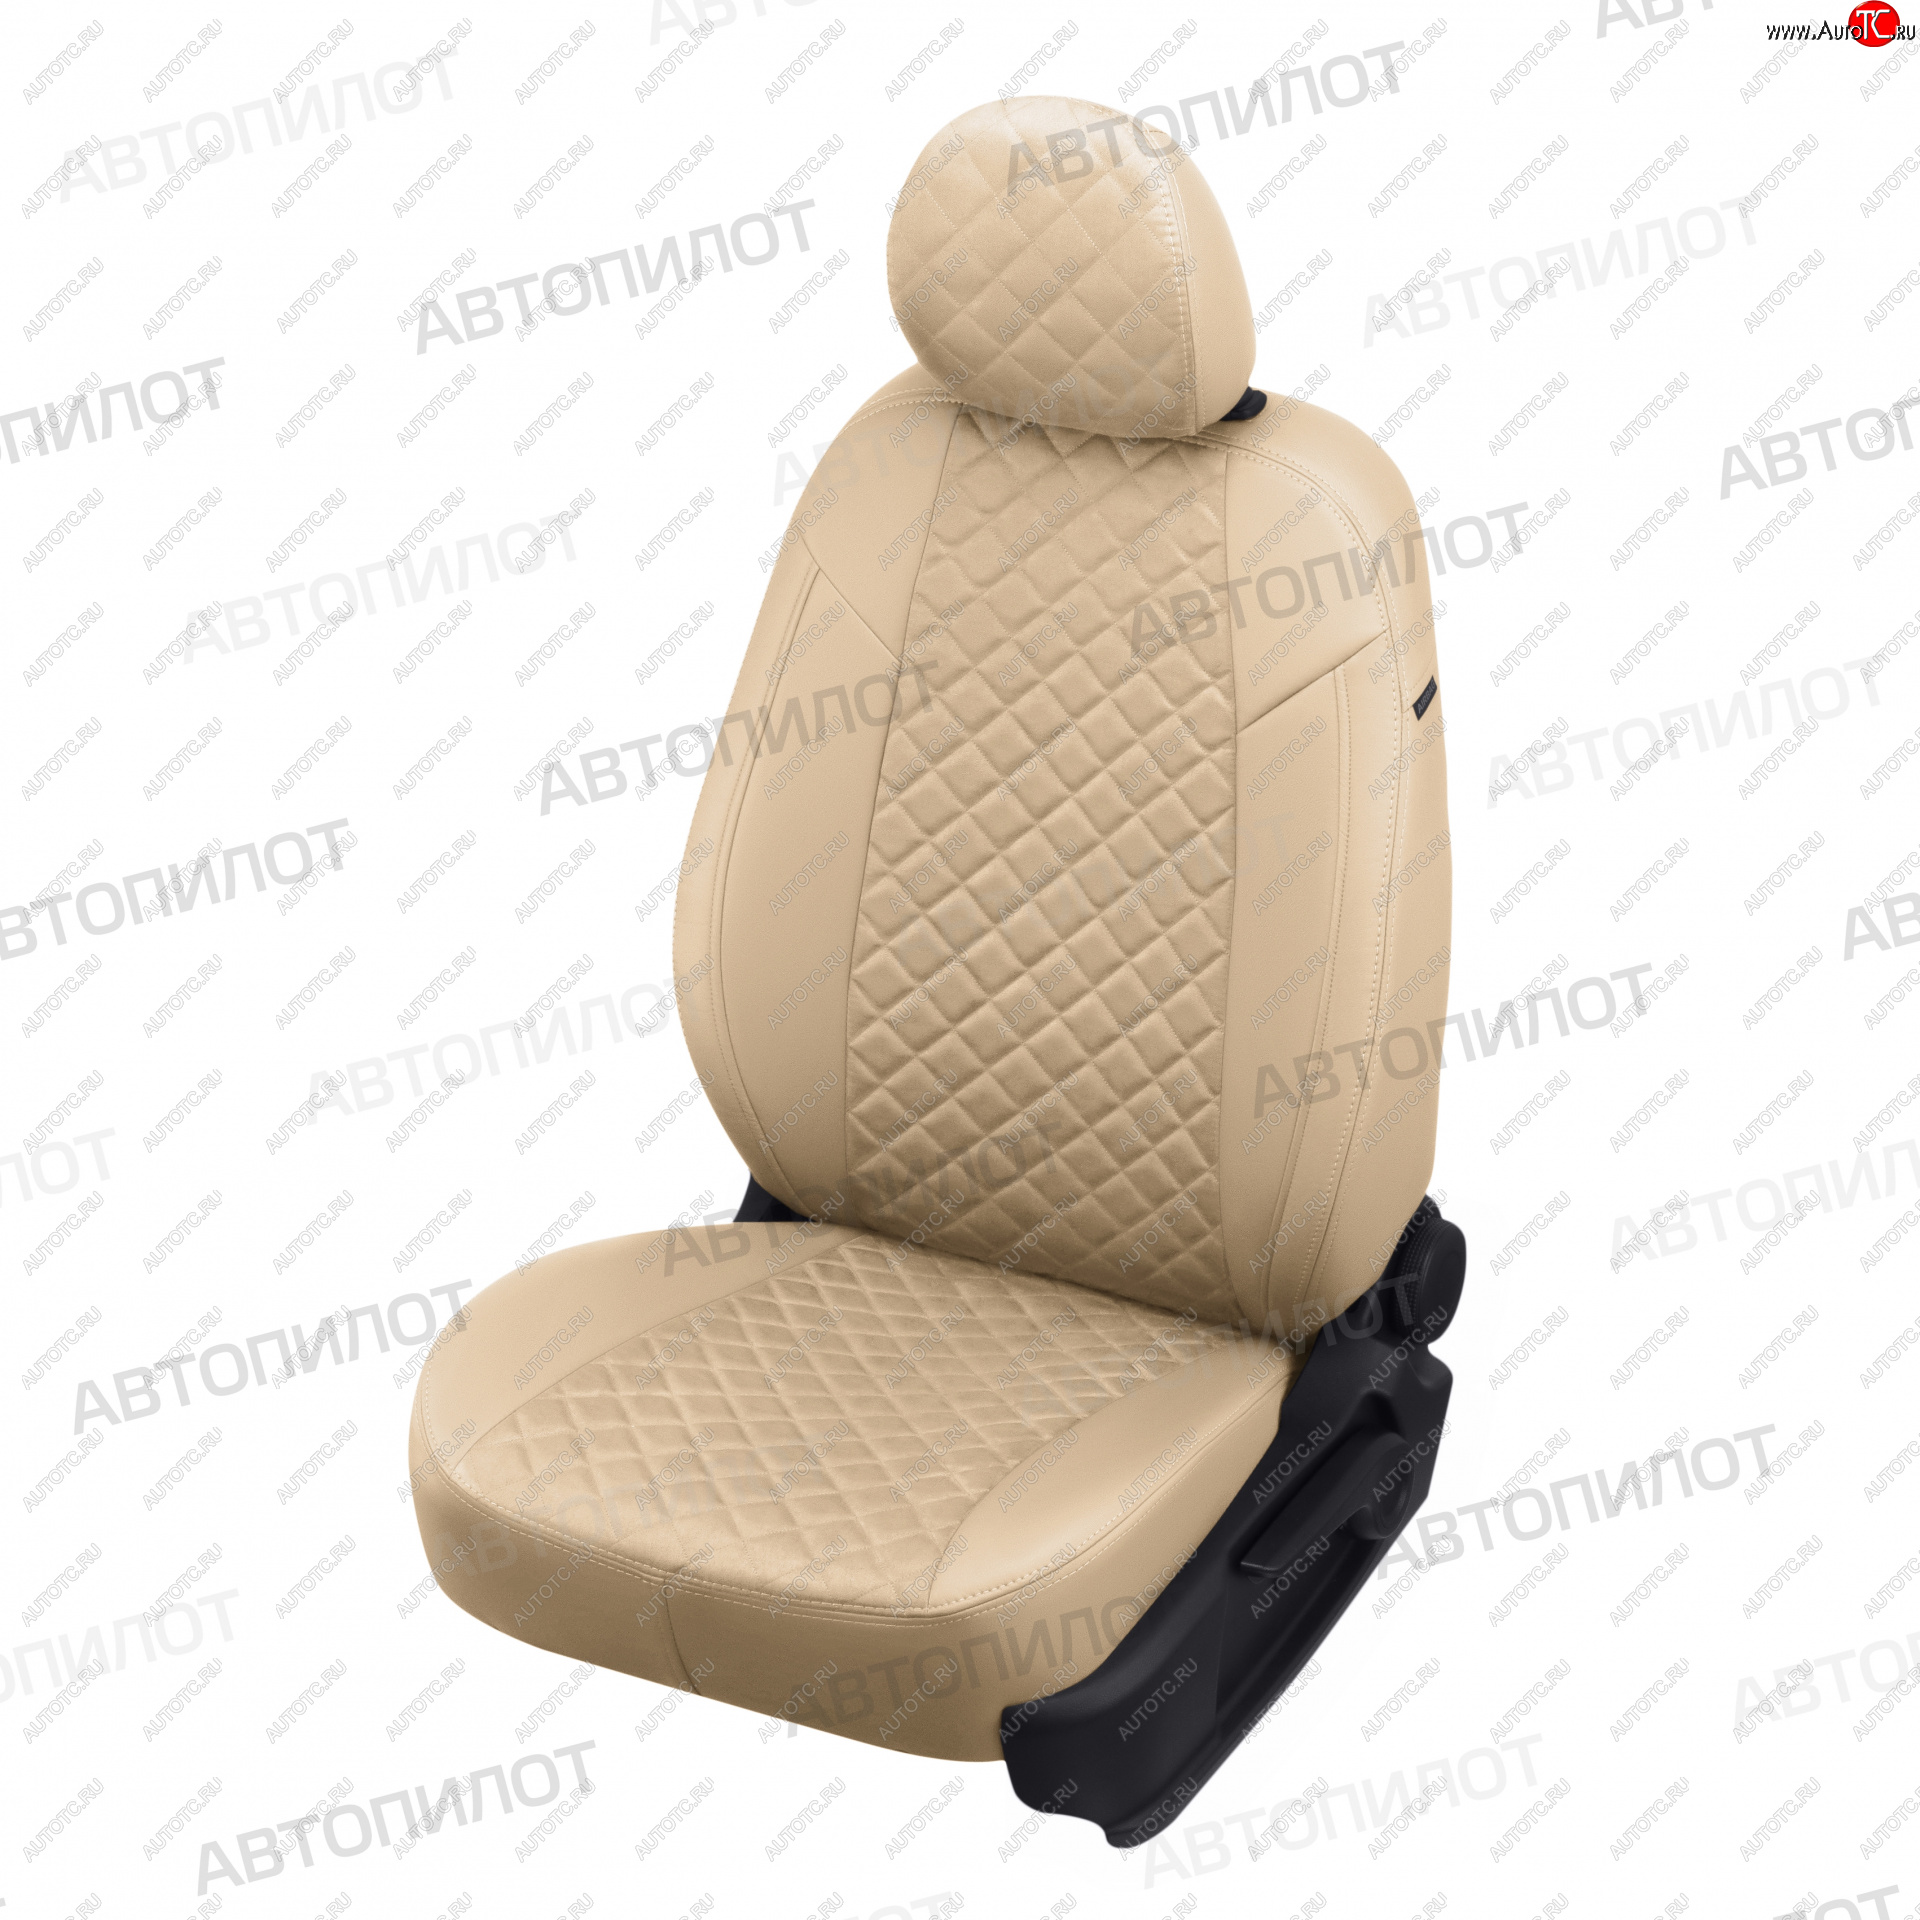 7 799 р. Чехлы сидений (экокожа/алькантара) Автопилот Ромб Hyundai I40 1 VF дорестайлинг универсал (2011-2015) (бежевый)